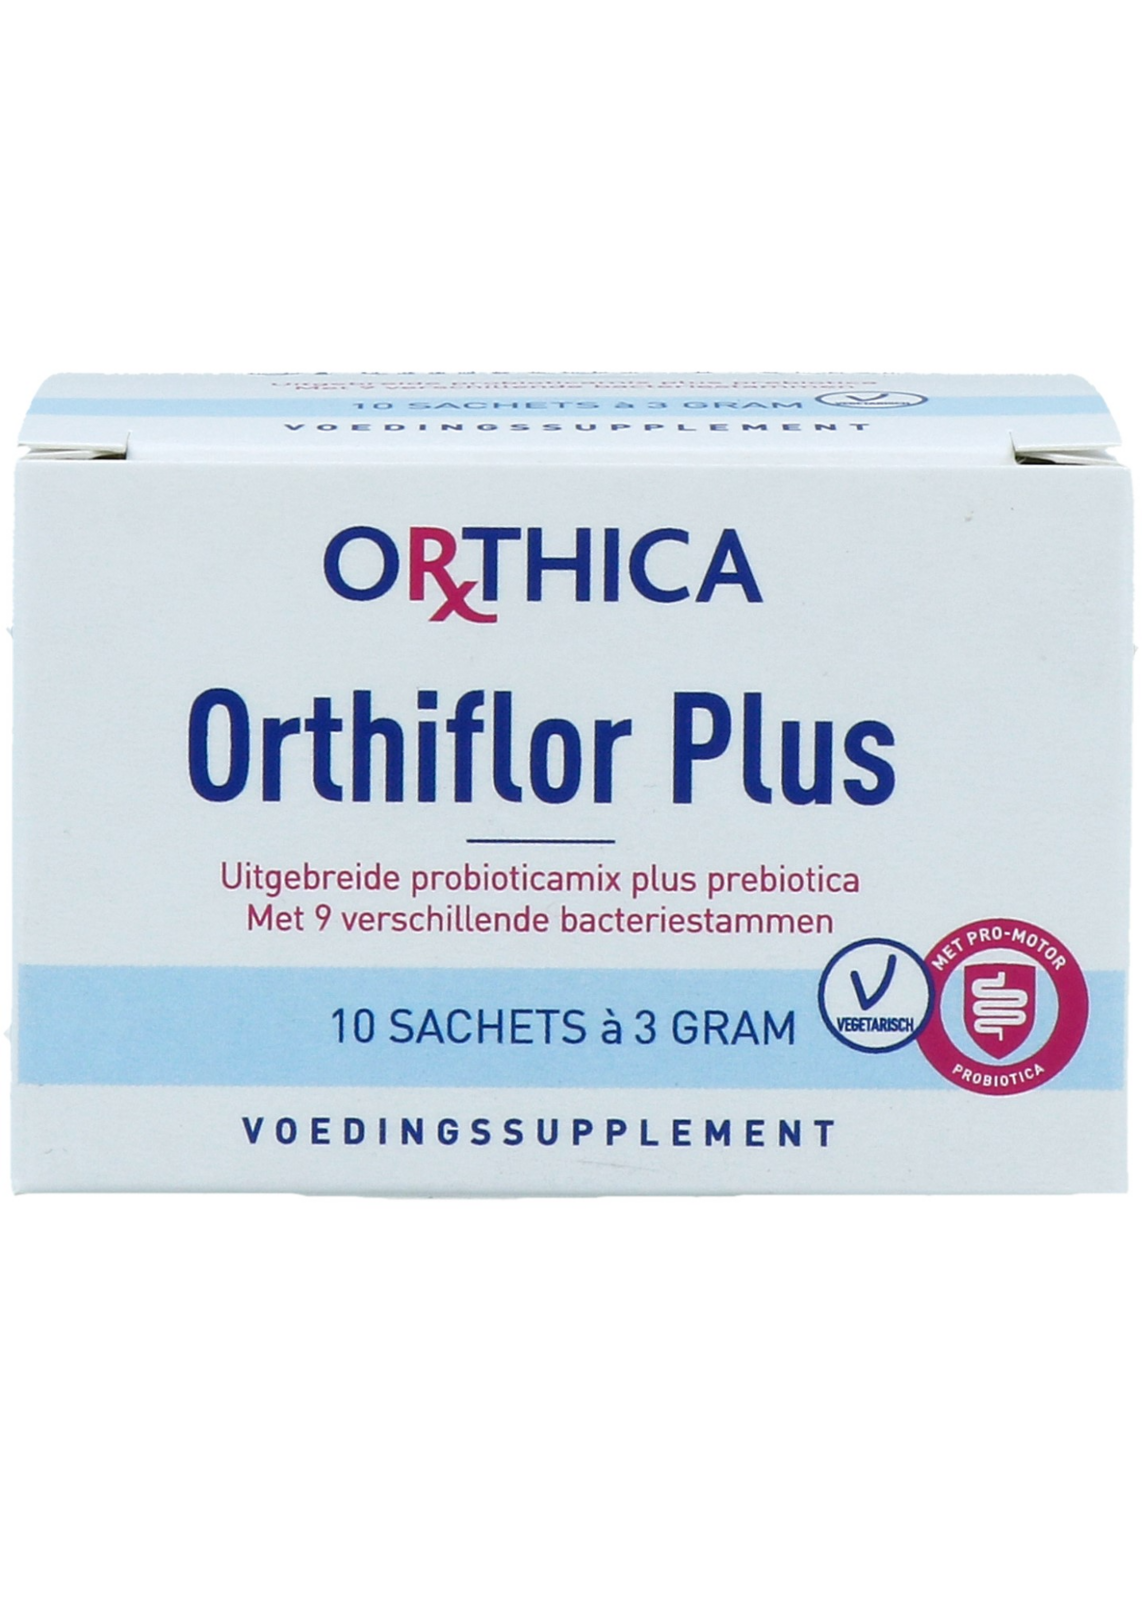 Orthica Orthiflor Plus Sachets kopen